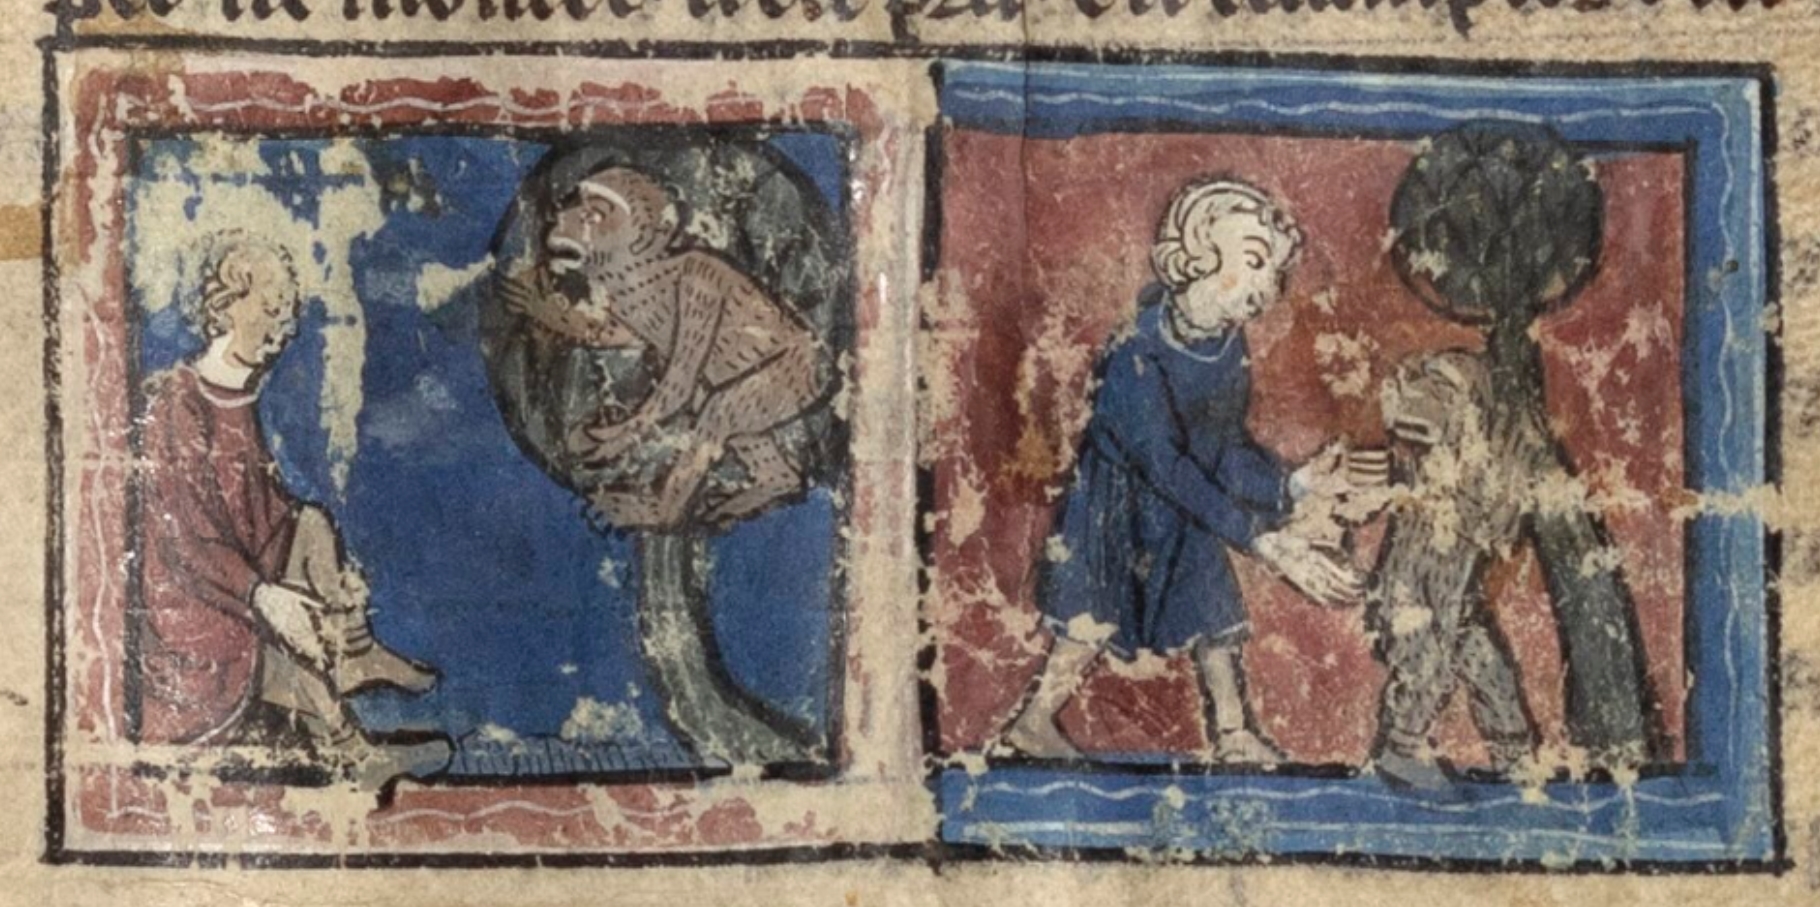 1200-1300-Bestiaire-damour-of-Richard-de-Fournival-BNF-fr.-1444-folio-258r